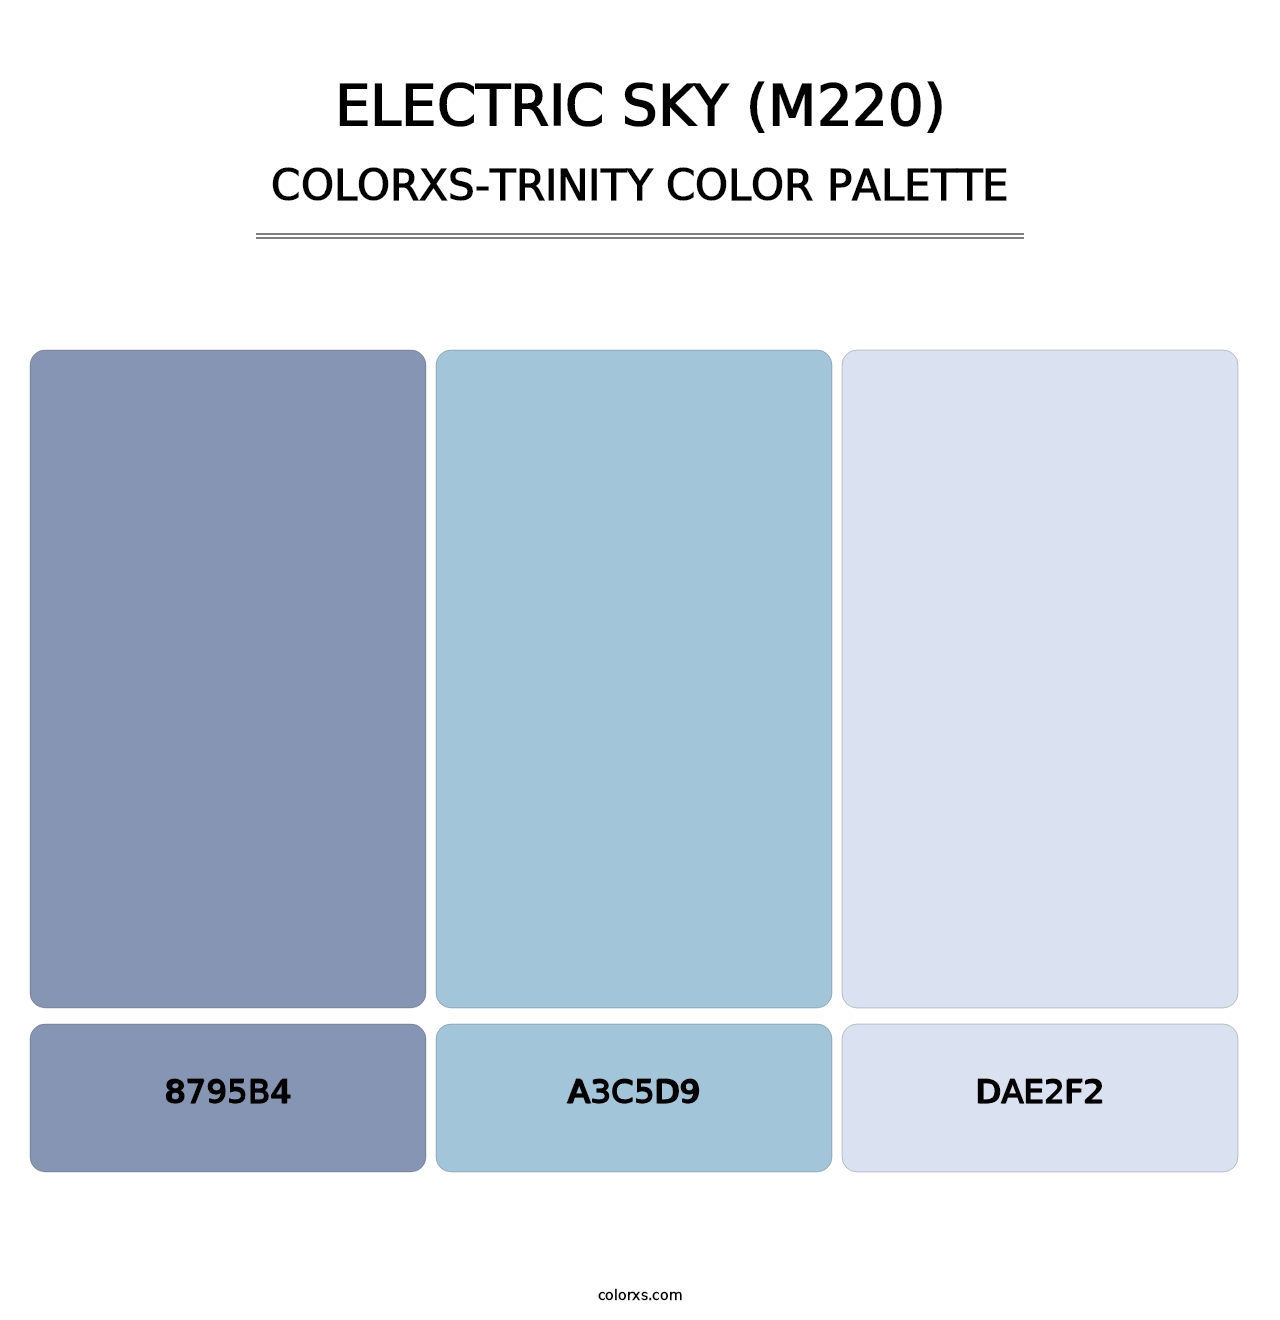 Electric Sky (M220) - Colorxs Trinity Palette